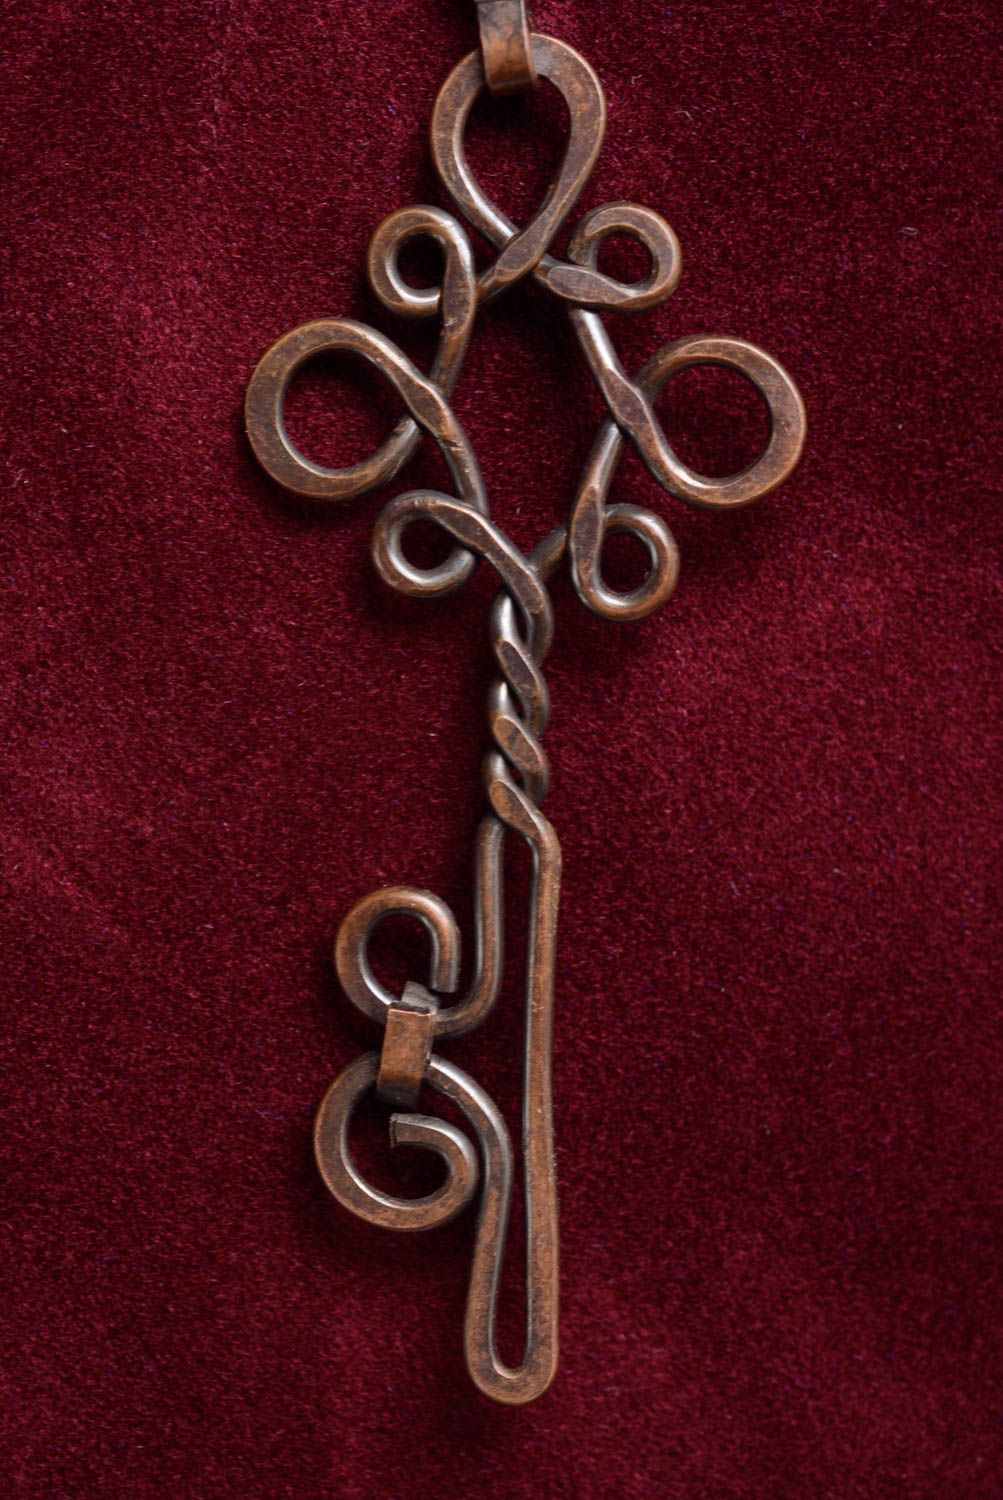 Handmade unusual pendant beautiful copper pendant stylish designer accessory photo 1